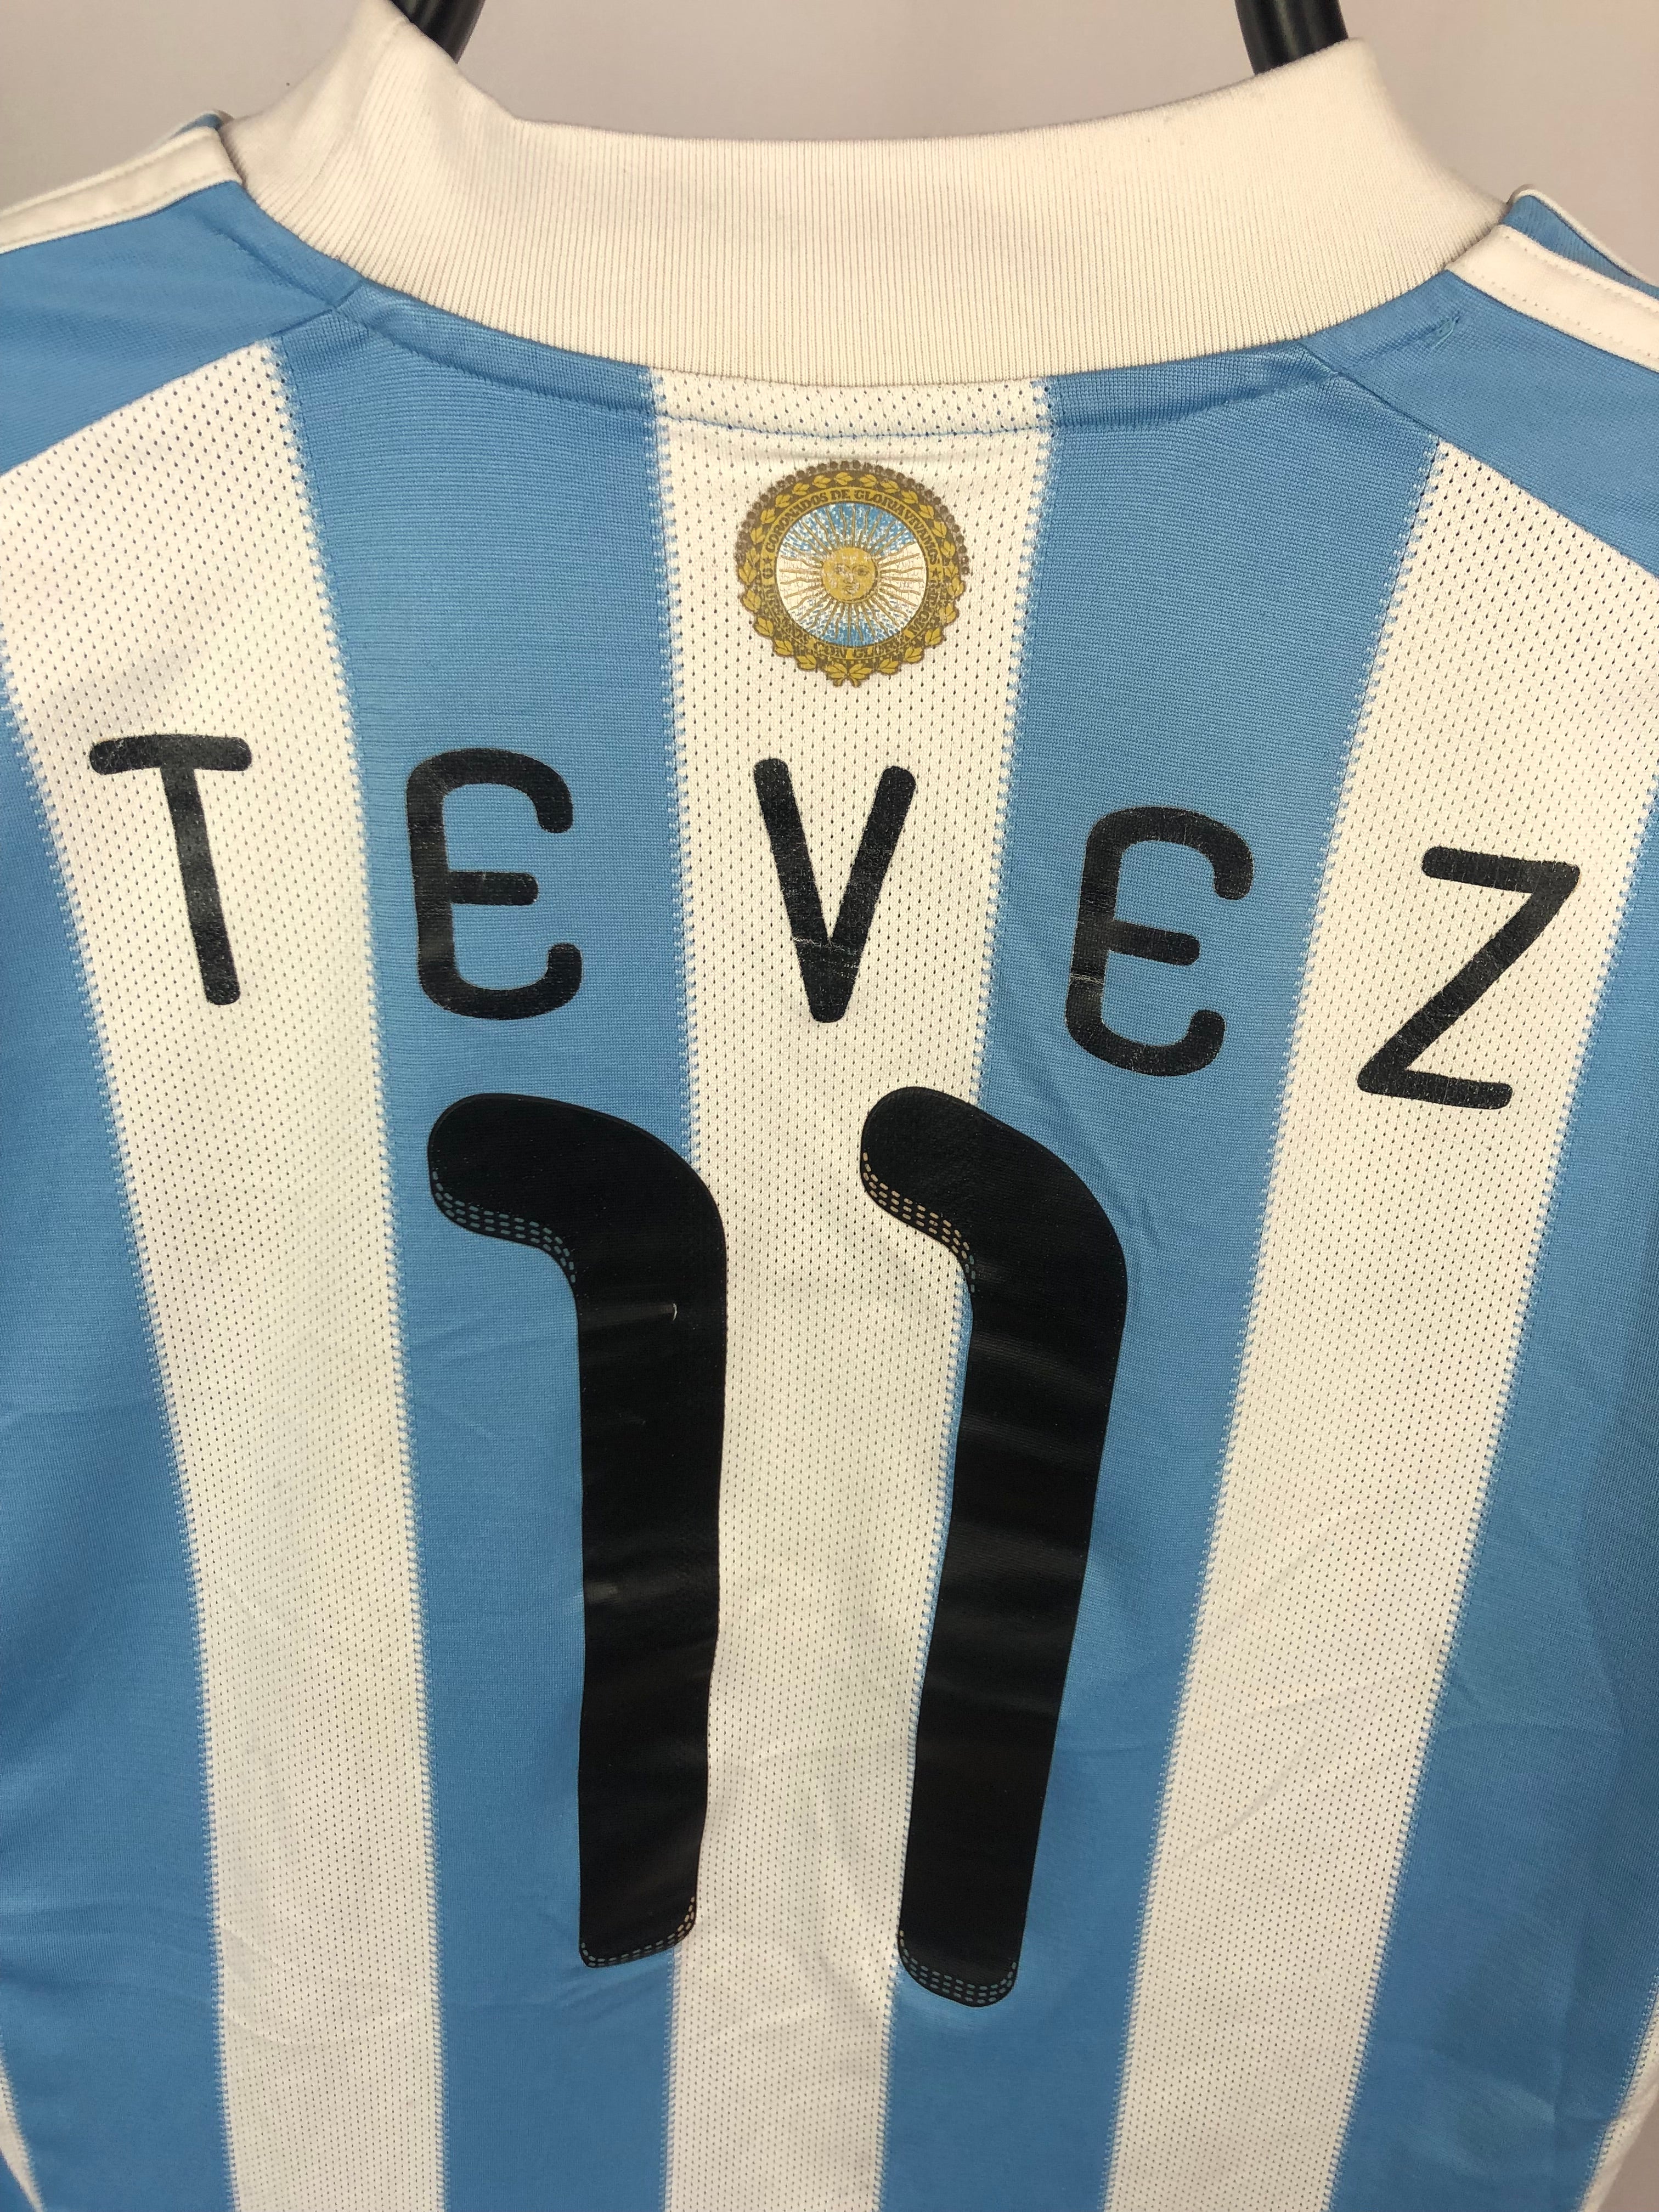 Carlos Tevez Argentina 10/11 hjemmebanetrøje - L